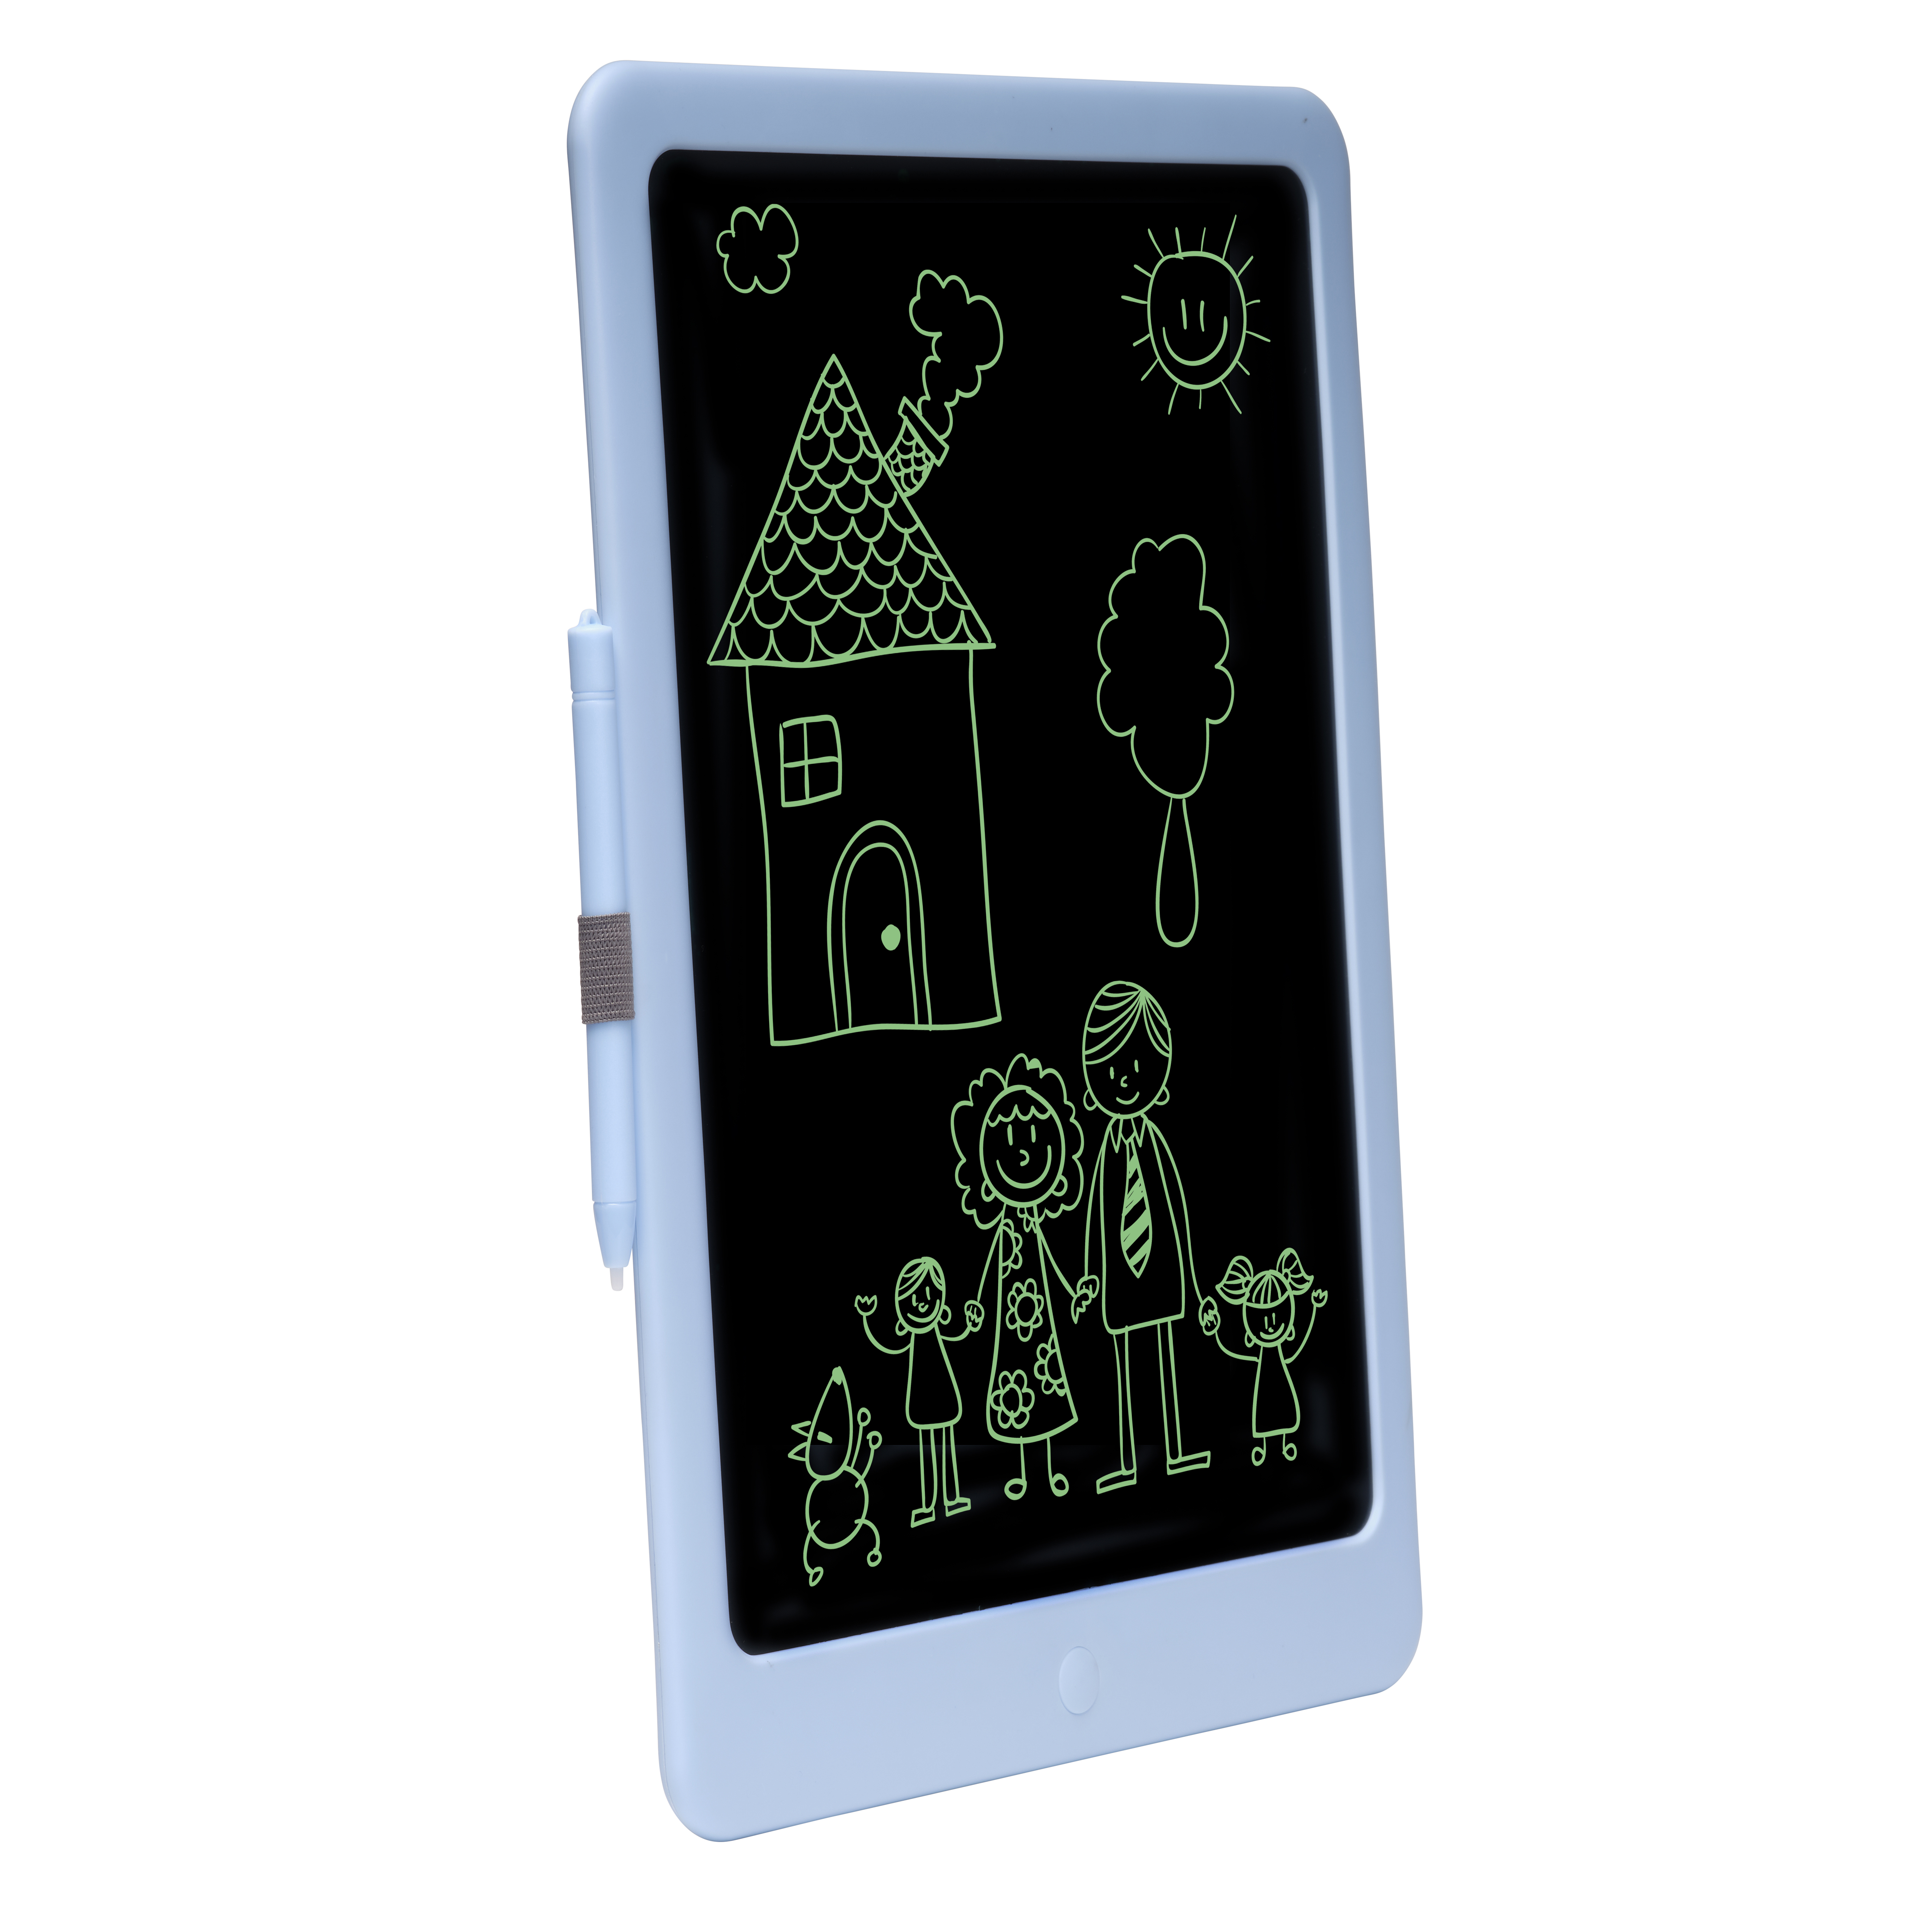 Denver Drawing Tablet LWT14510 - Tablette pour enfants alternative au dessin  sur